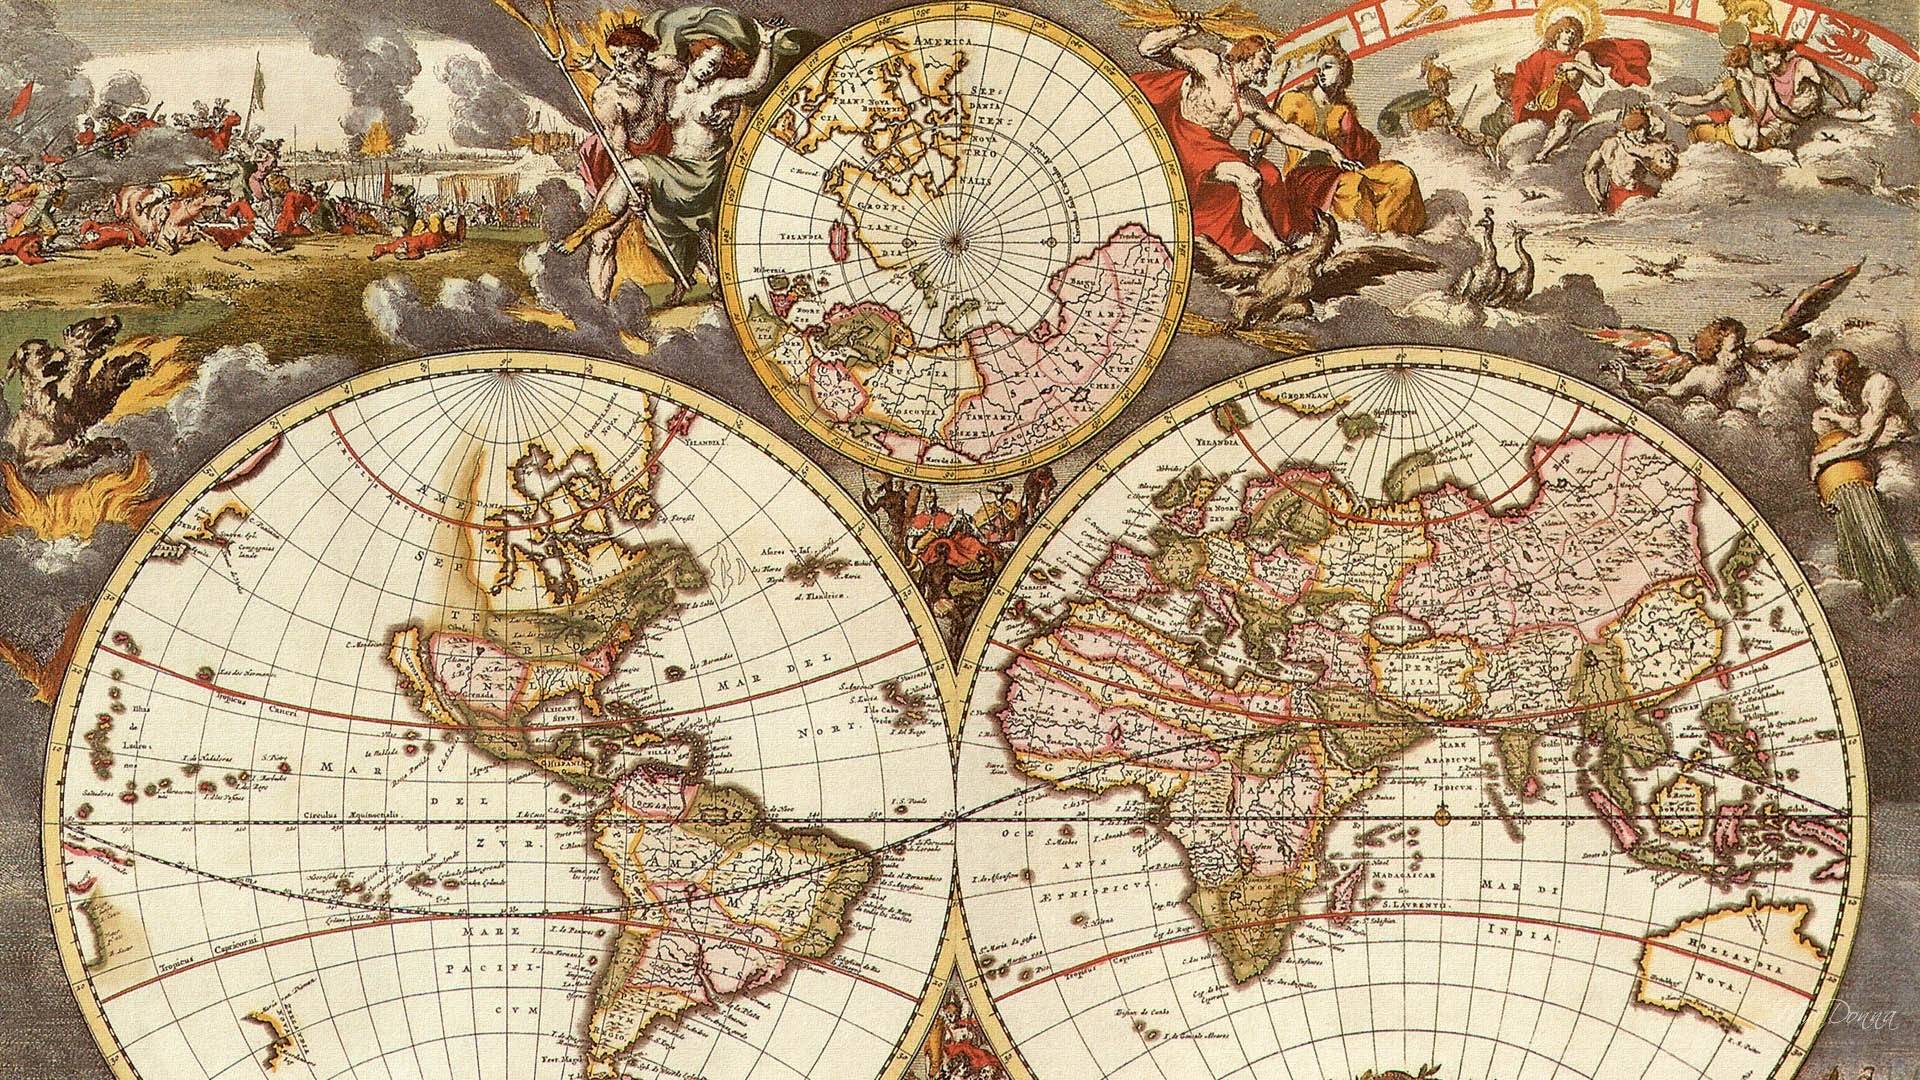 vintage world map background